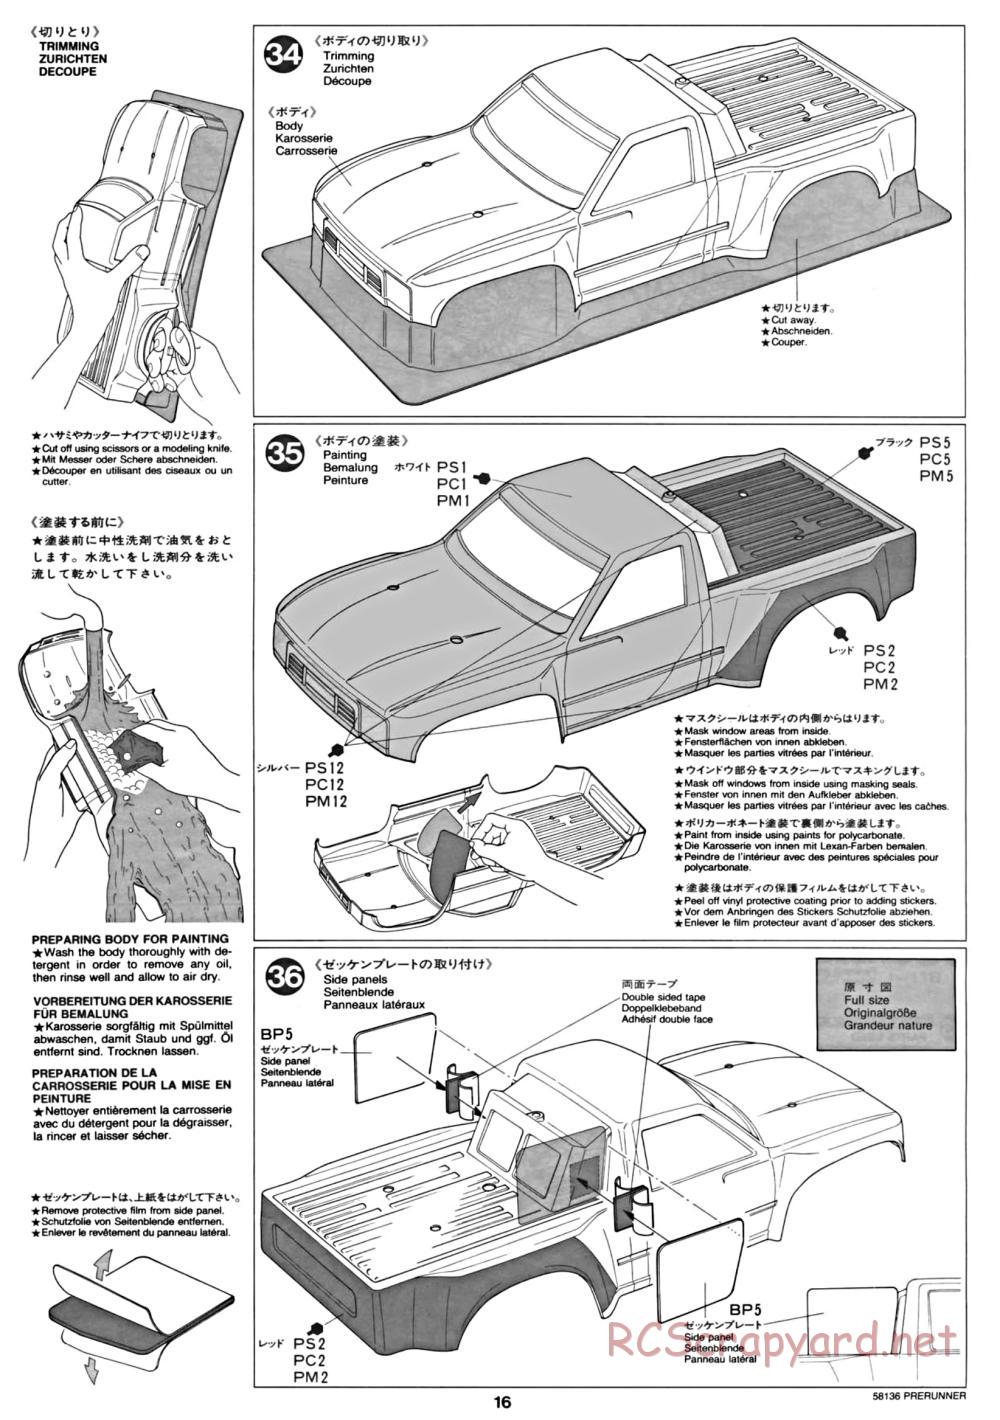 Tamiya - Toyota Prerunner Chassis - Manual - Page 16